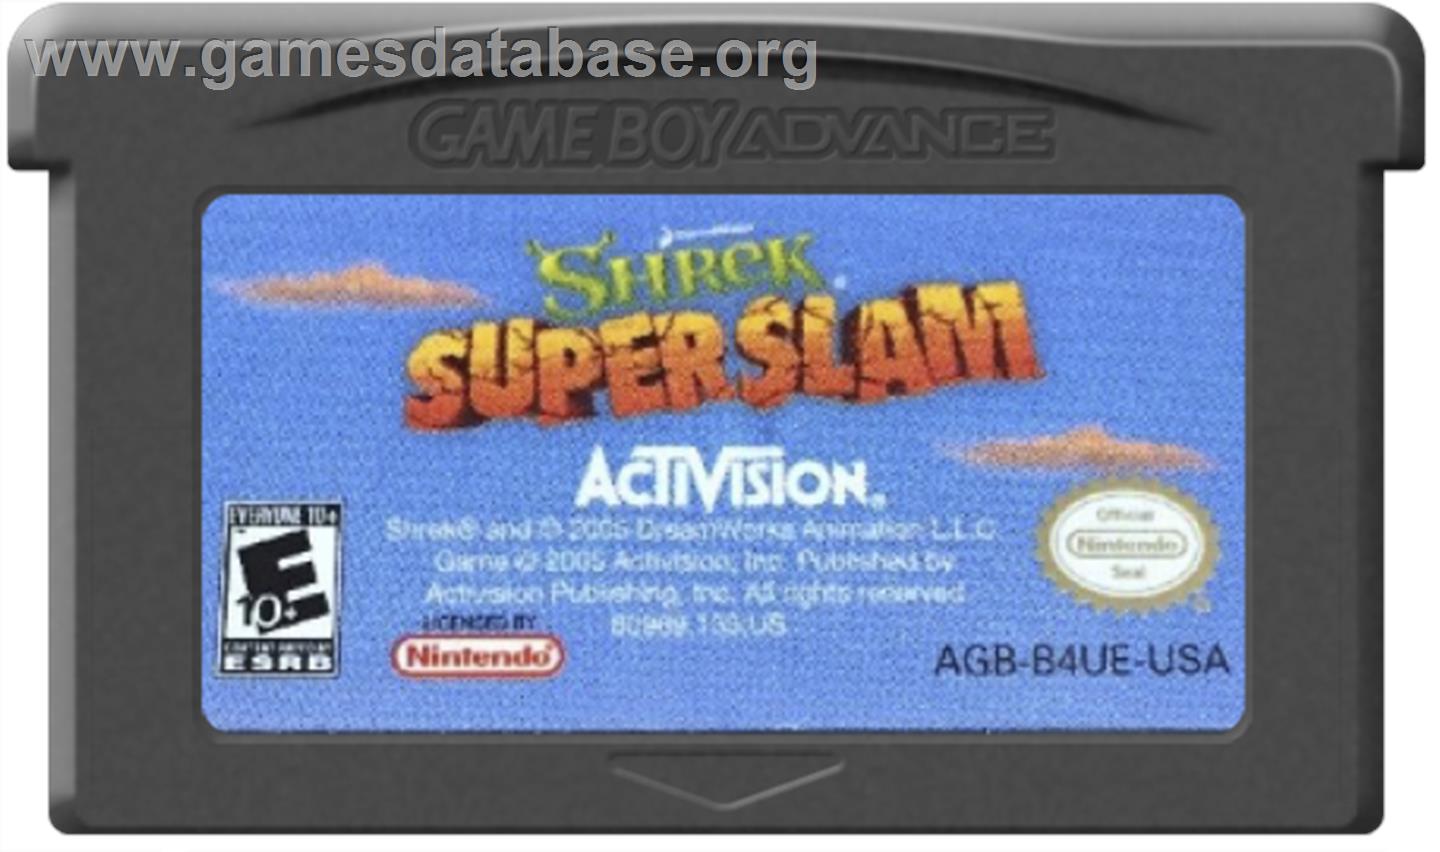 Shrek SuperSlam - Nintendo Game Boy Advance - Artwork - Cartridge